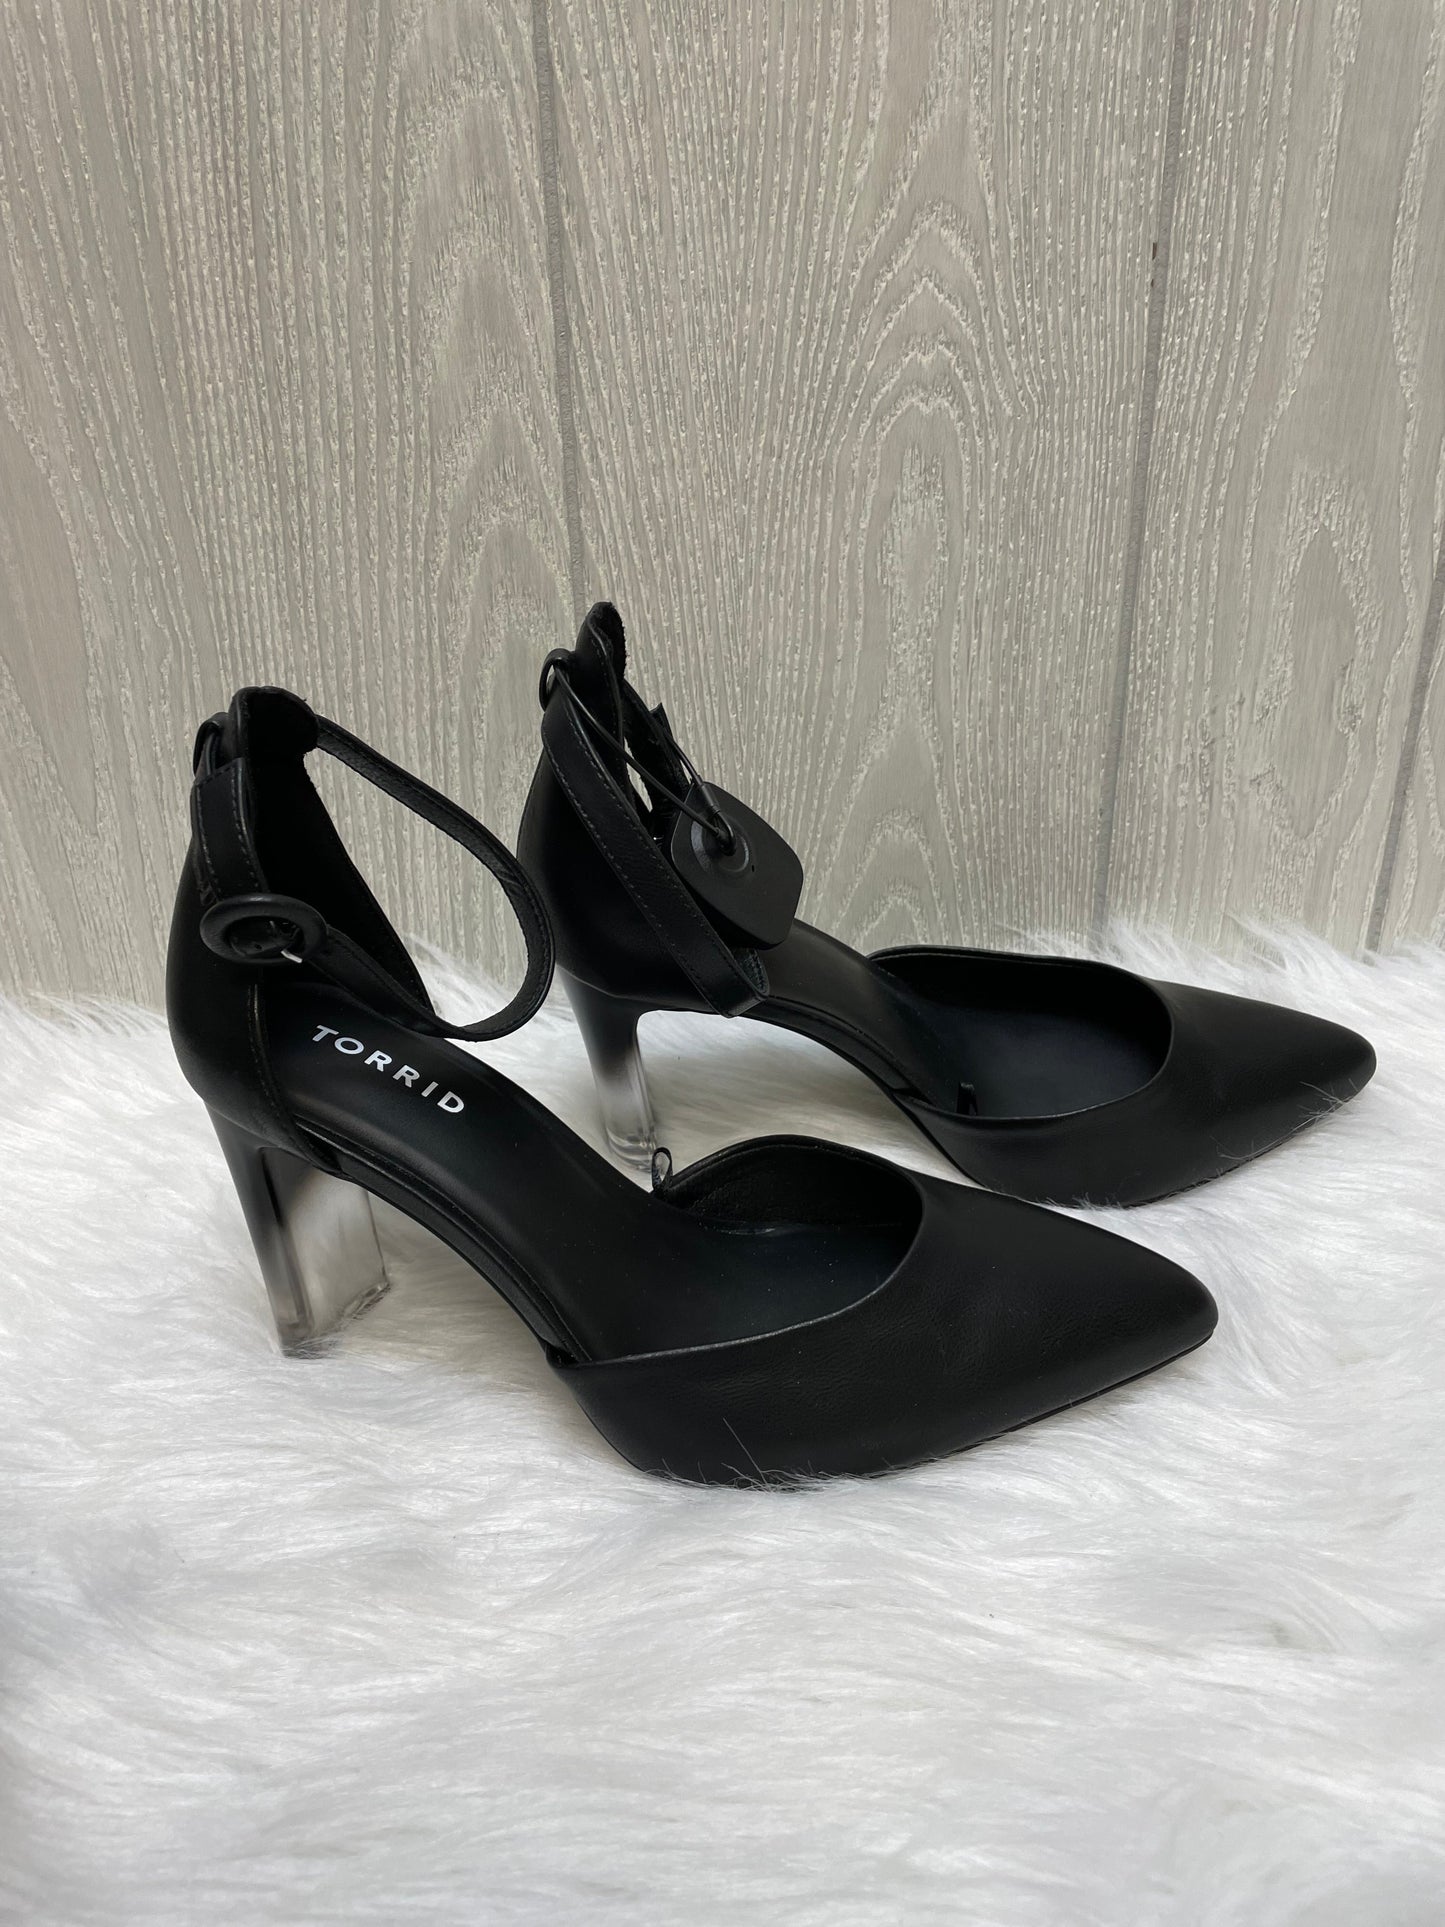 Black Shoes Heels Stiletto Torrid, Size 7.5